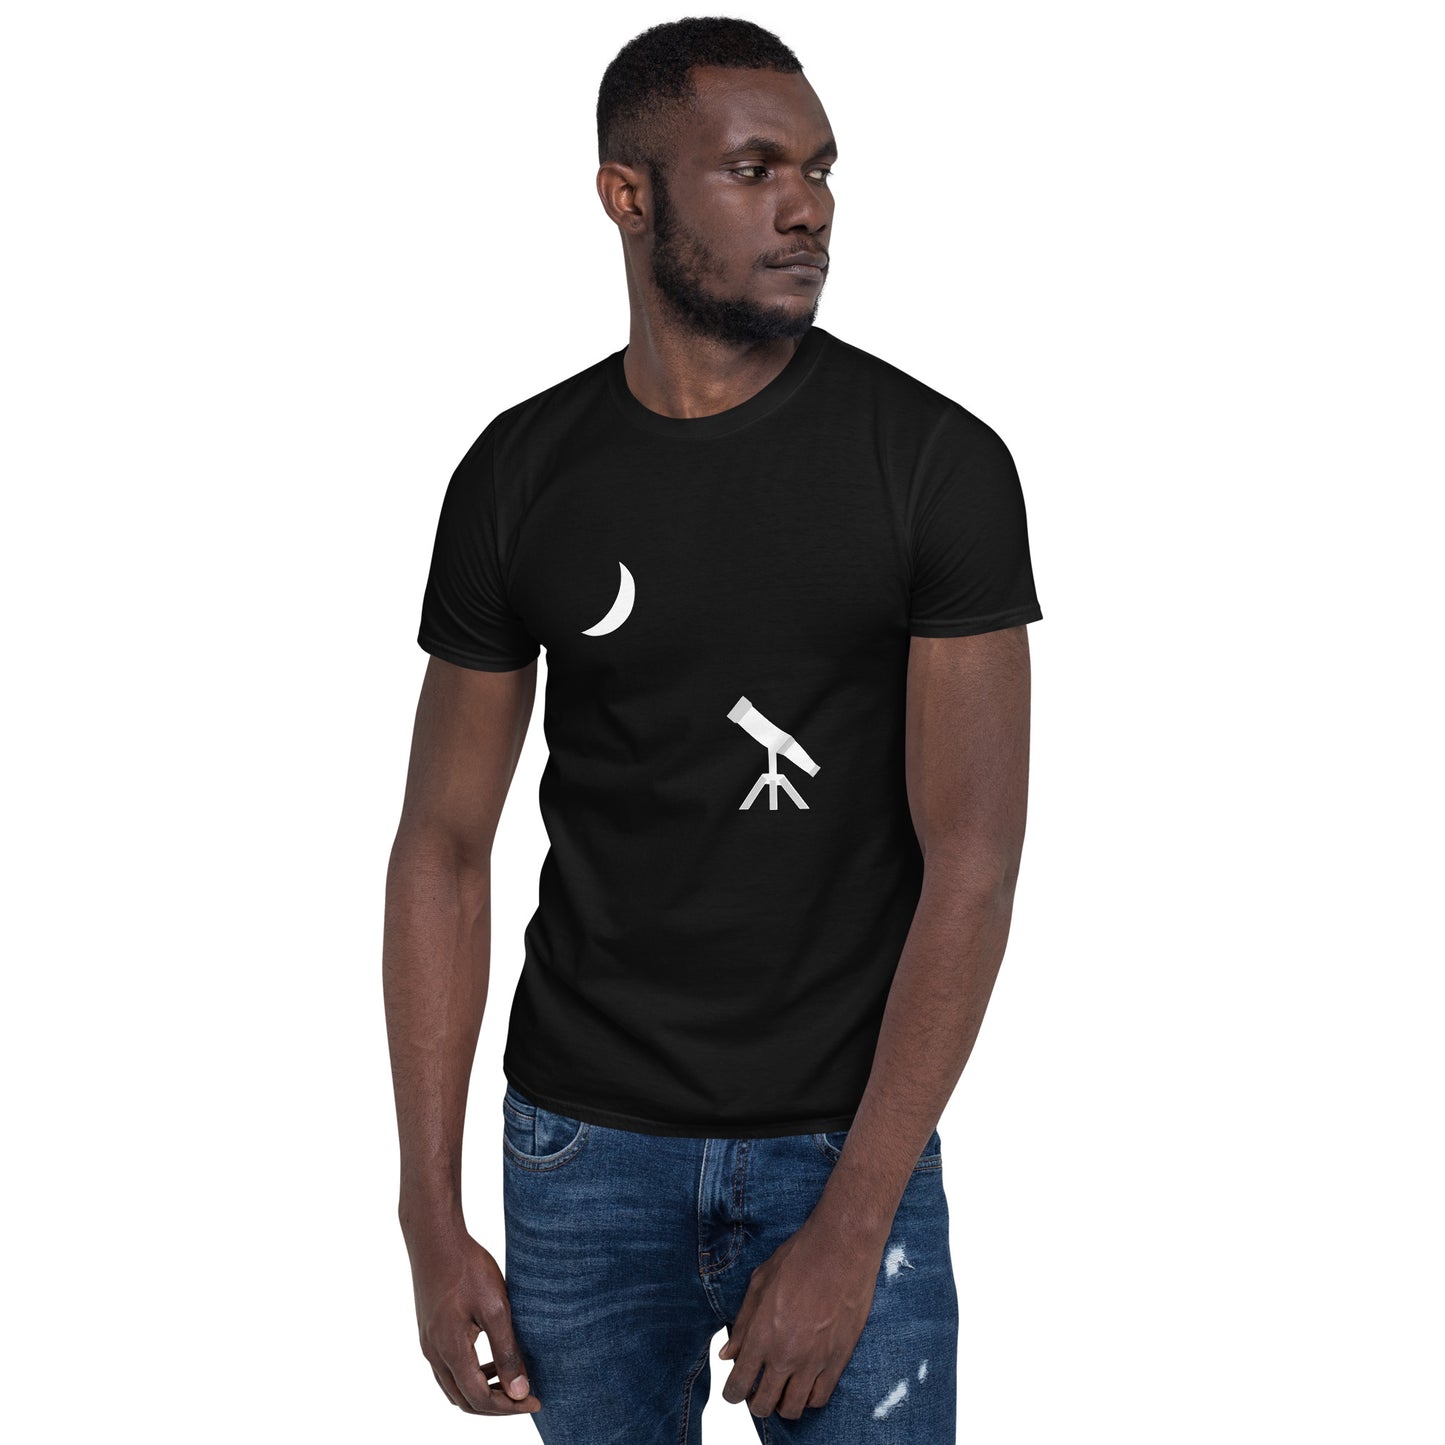 Telescope and Moon Unisex T-Shirt by Rami_astro (No Logo on Sleeve)